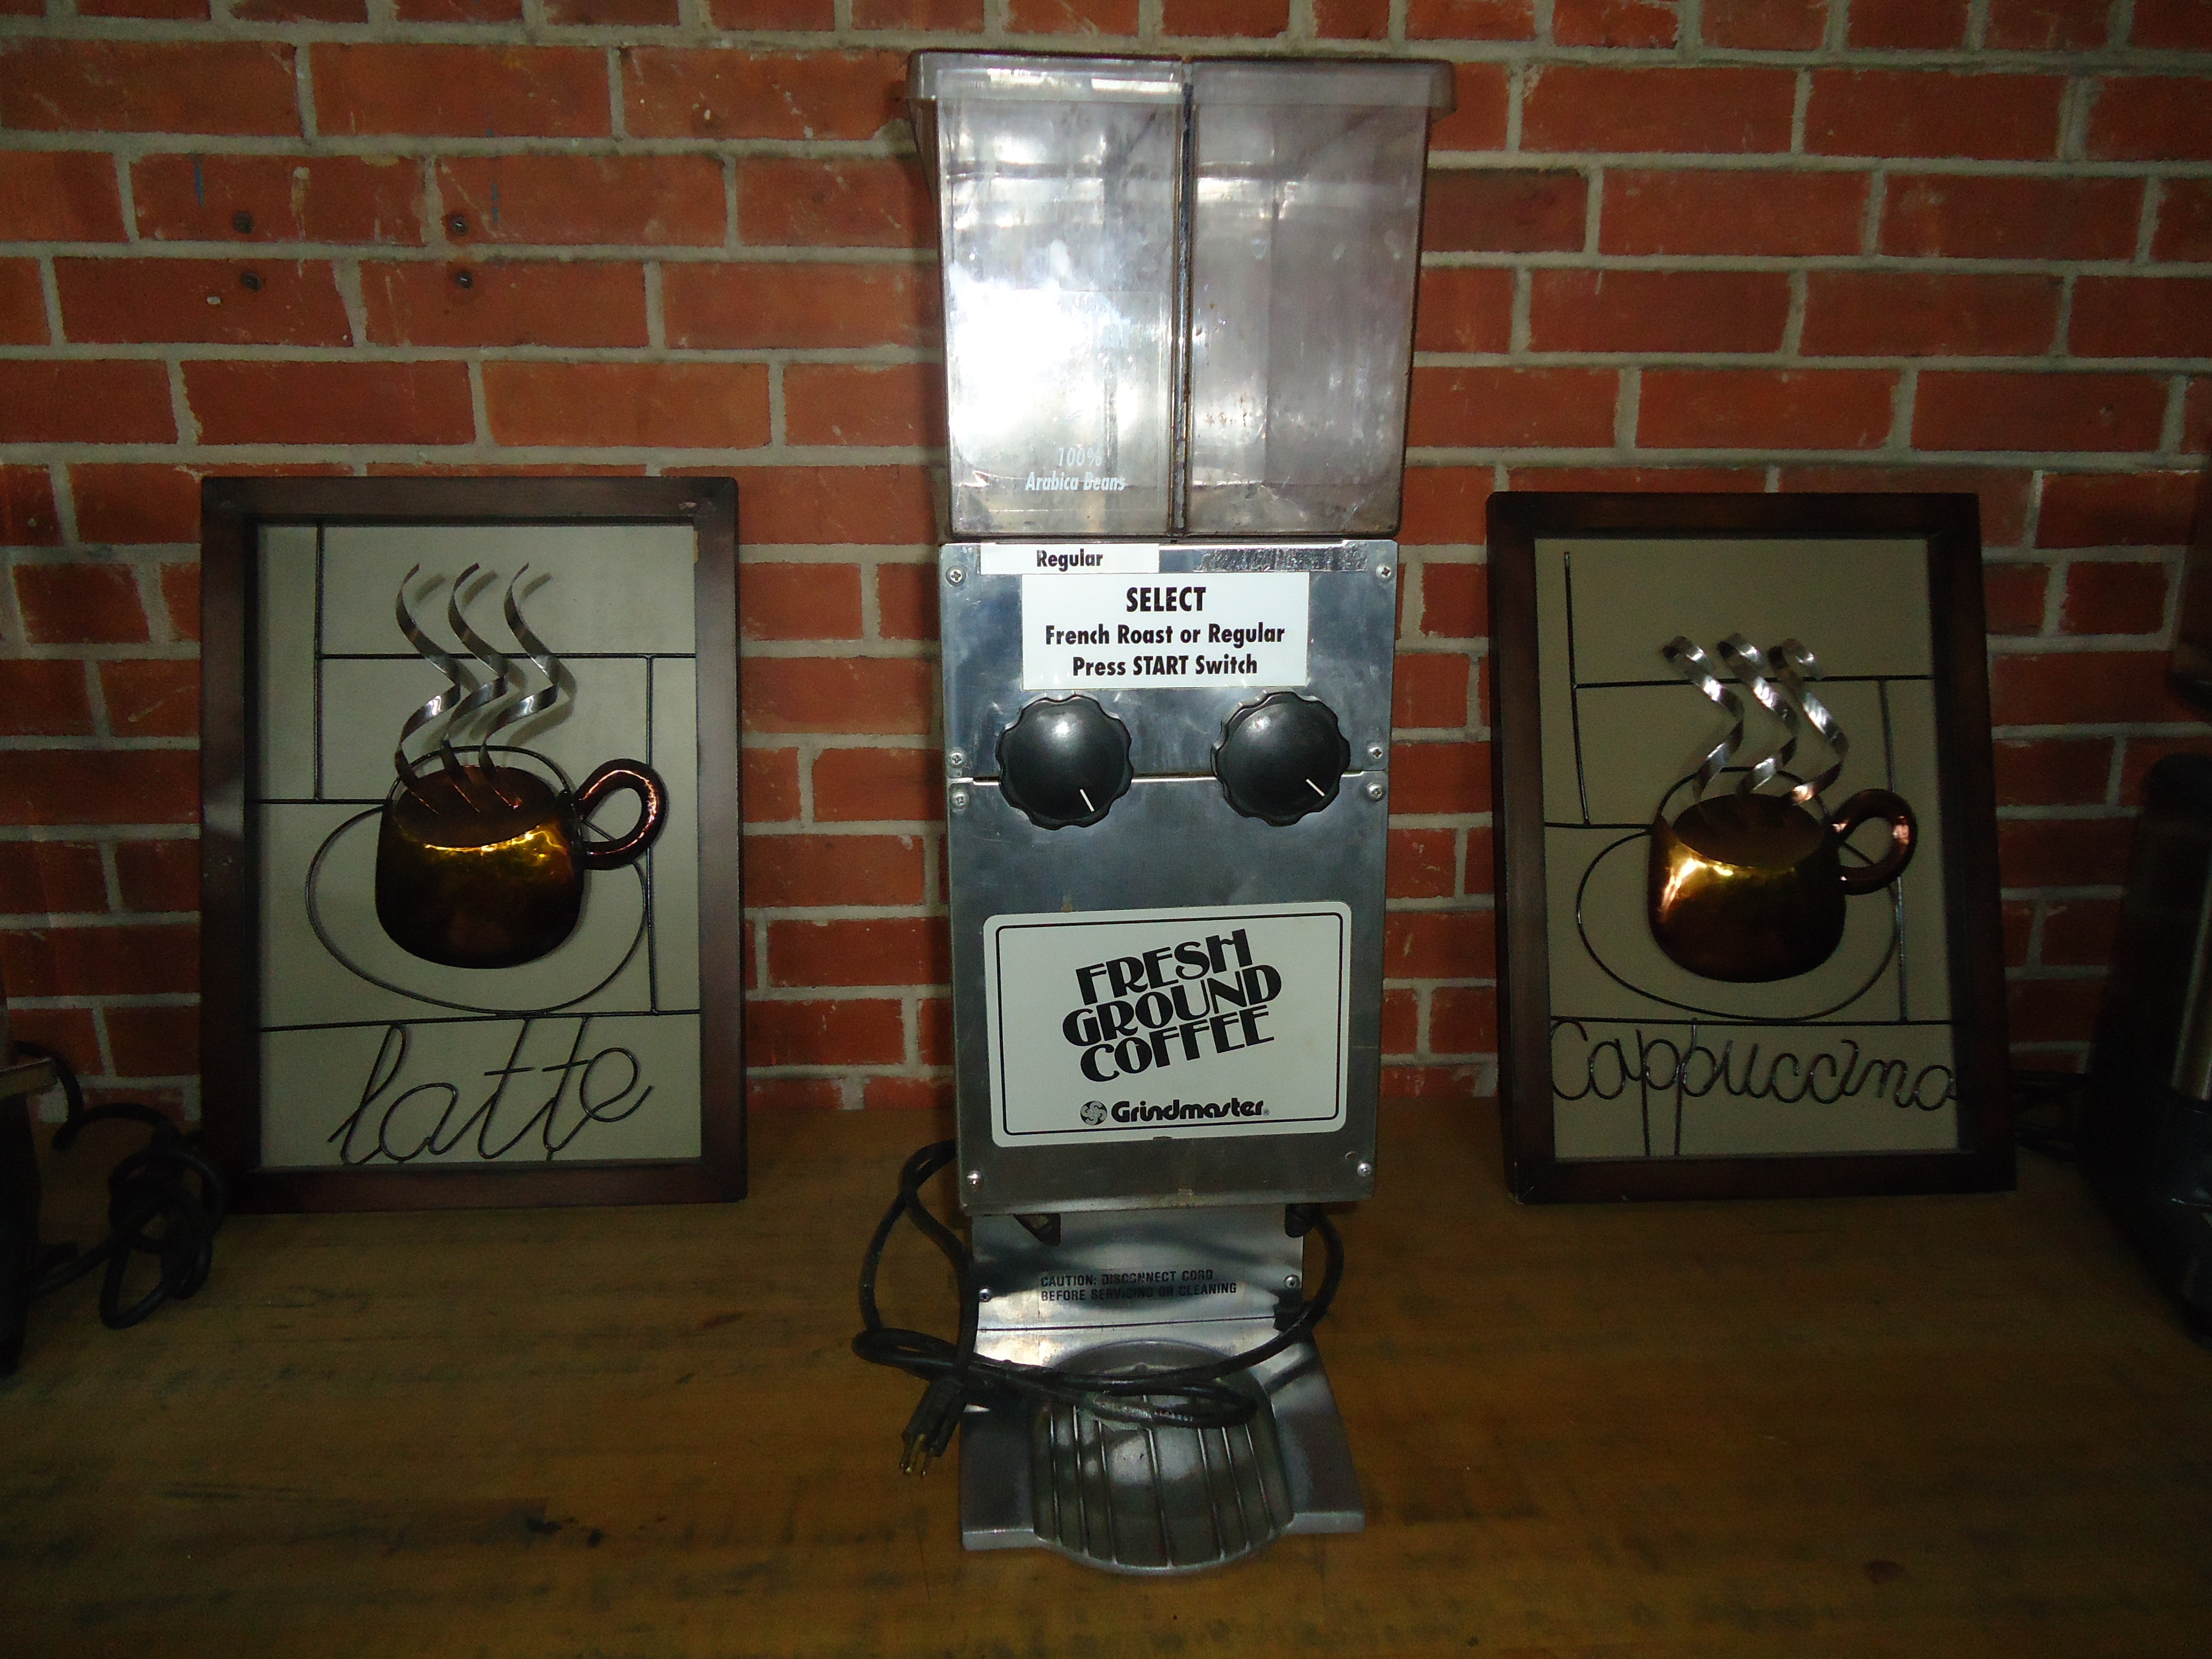 Grindmaster Dual Hopper Coffee Maker